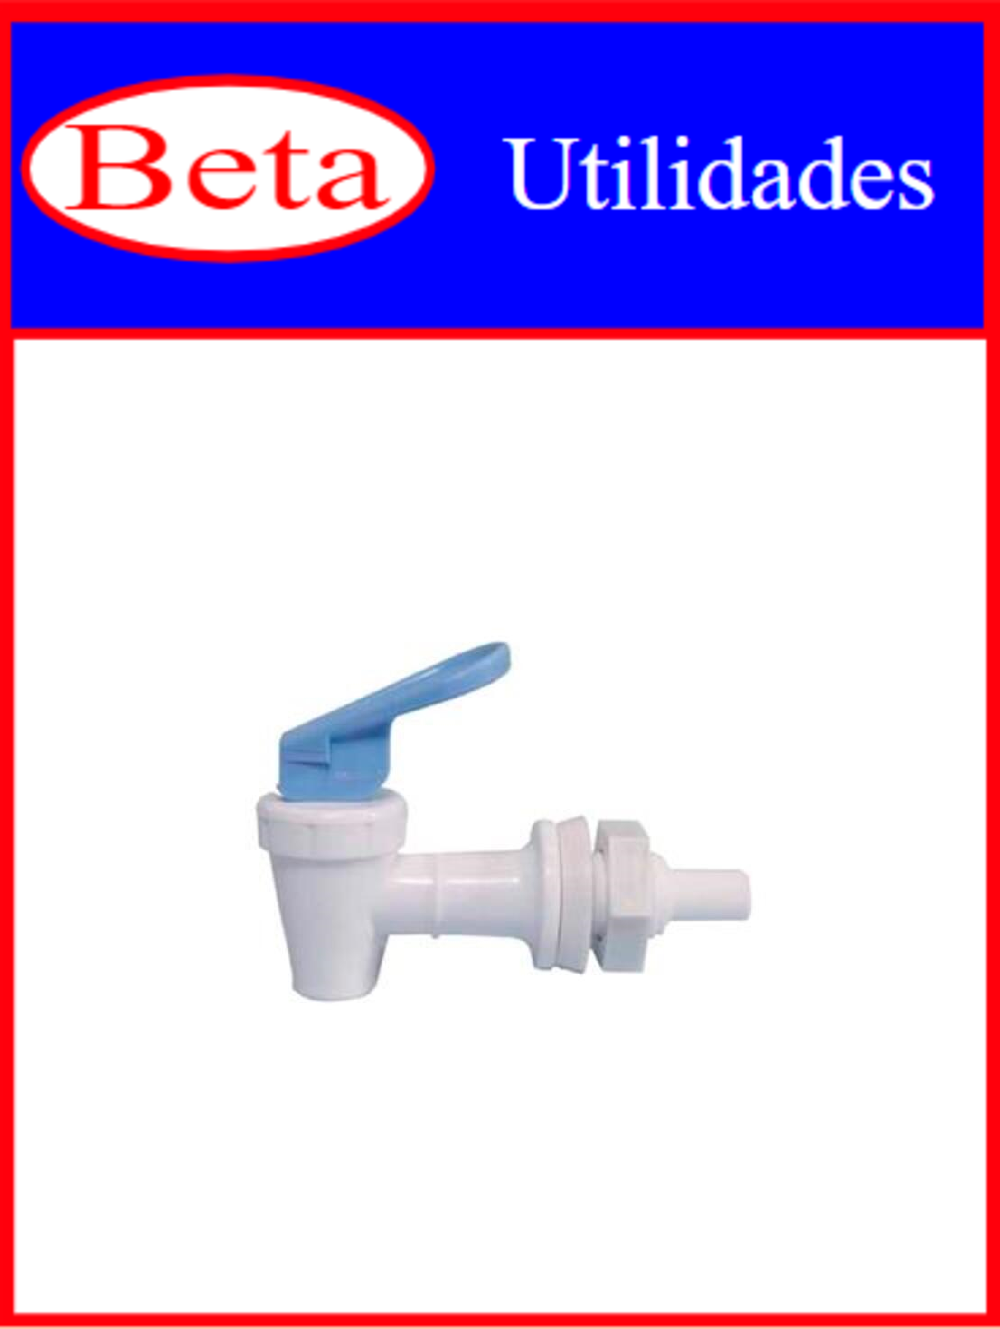 7898021401721 - BETA UTILIDADES TORNEIRA P/ BEBEDOURO